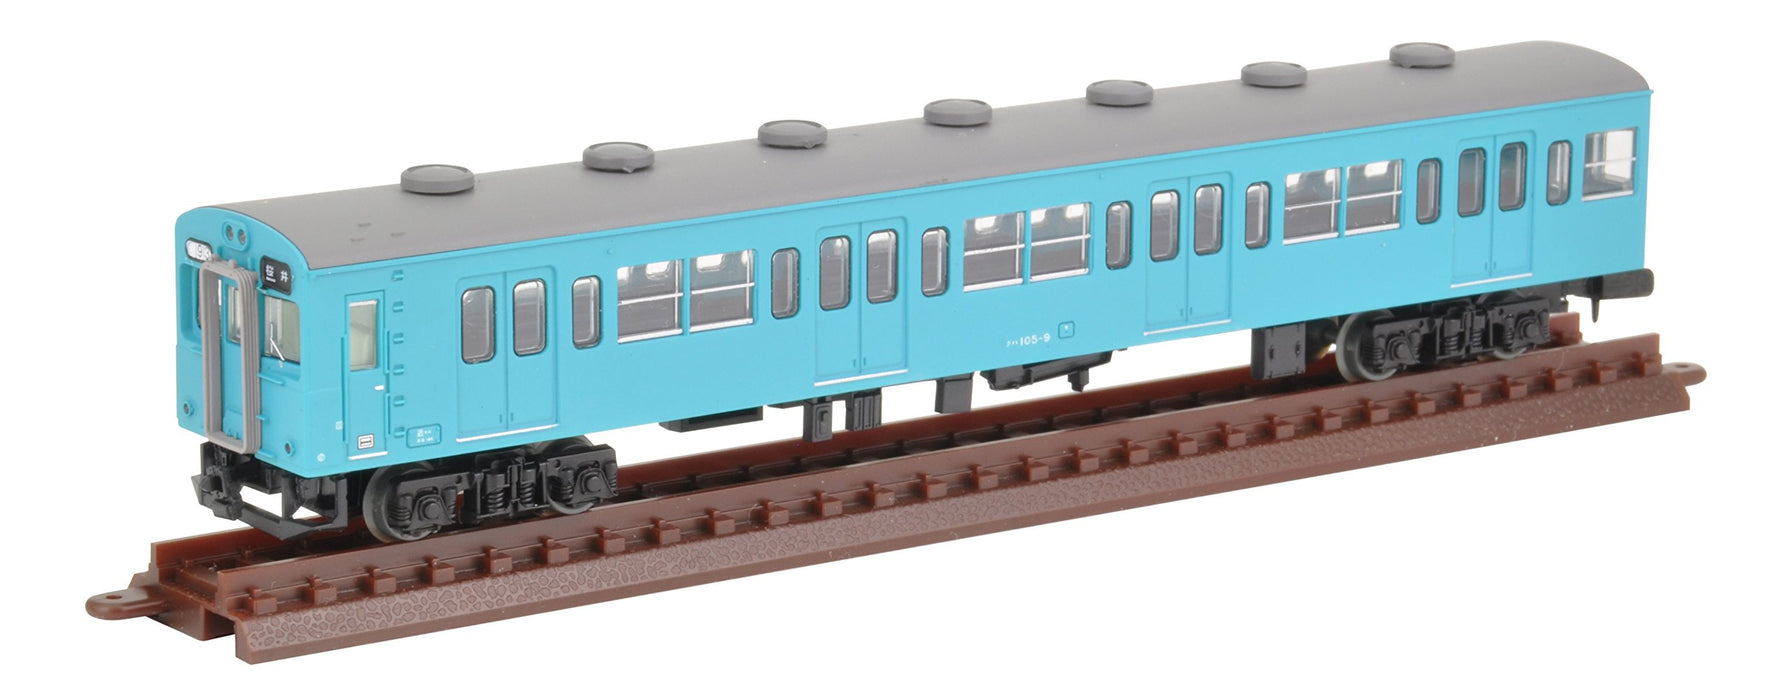 Tomytec JR105 Sakurai/Wakayama 2-Wagen-Set, blau, Eisenbahn-Sammlung, Diorama